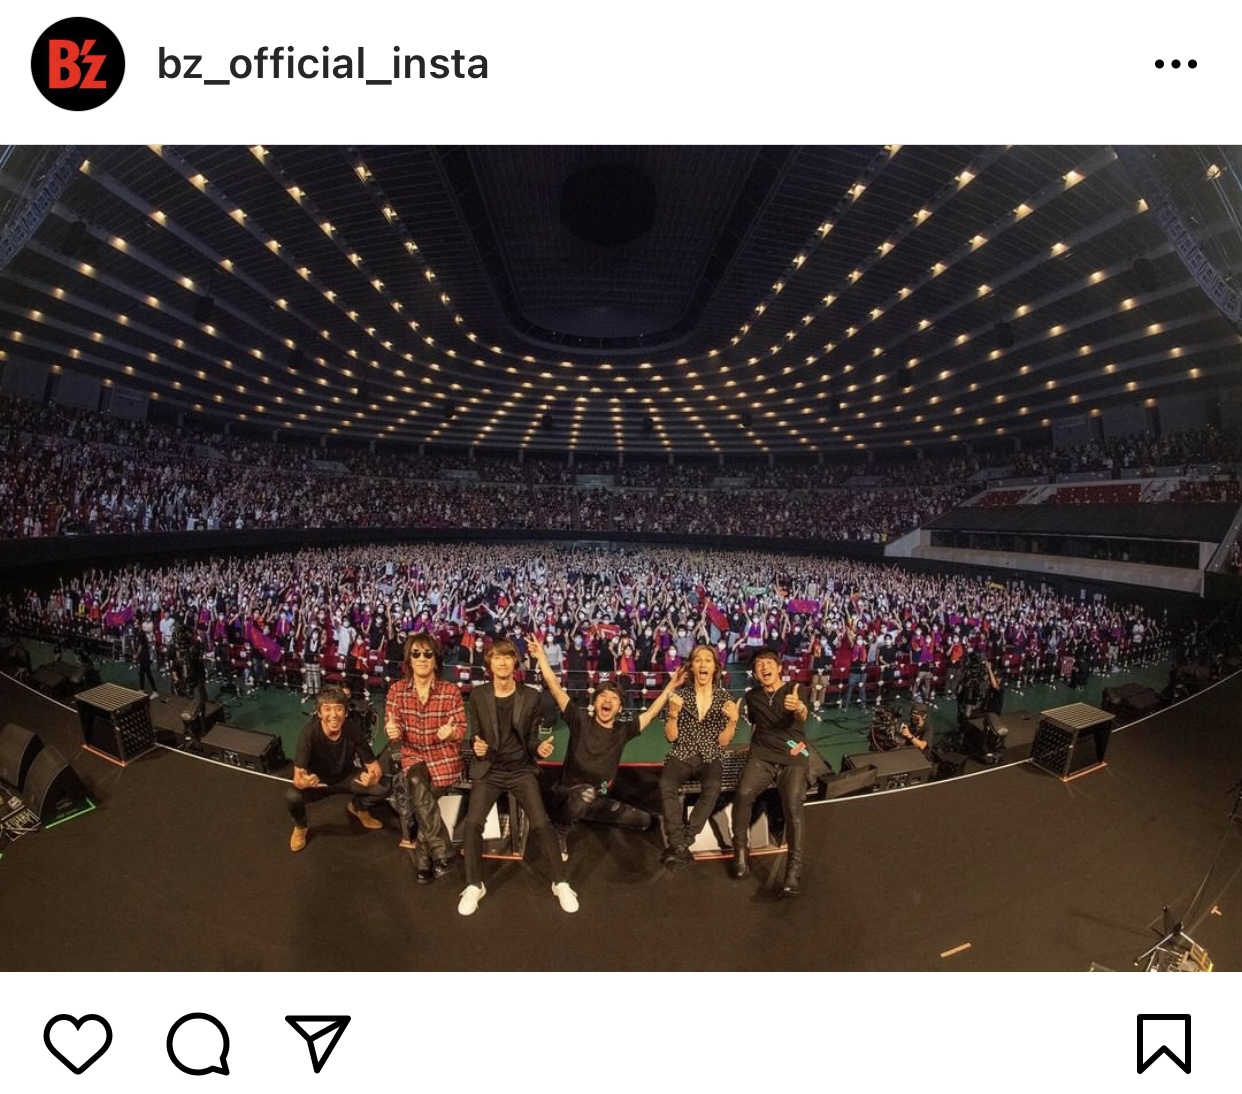 B'zとMr.Childrenのメンバー全員が写った『UNITE #01』ステージでの写真